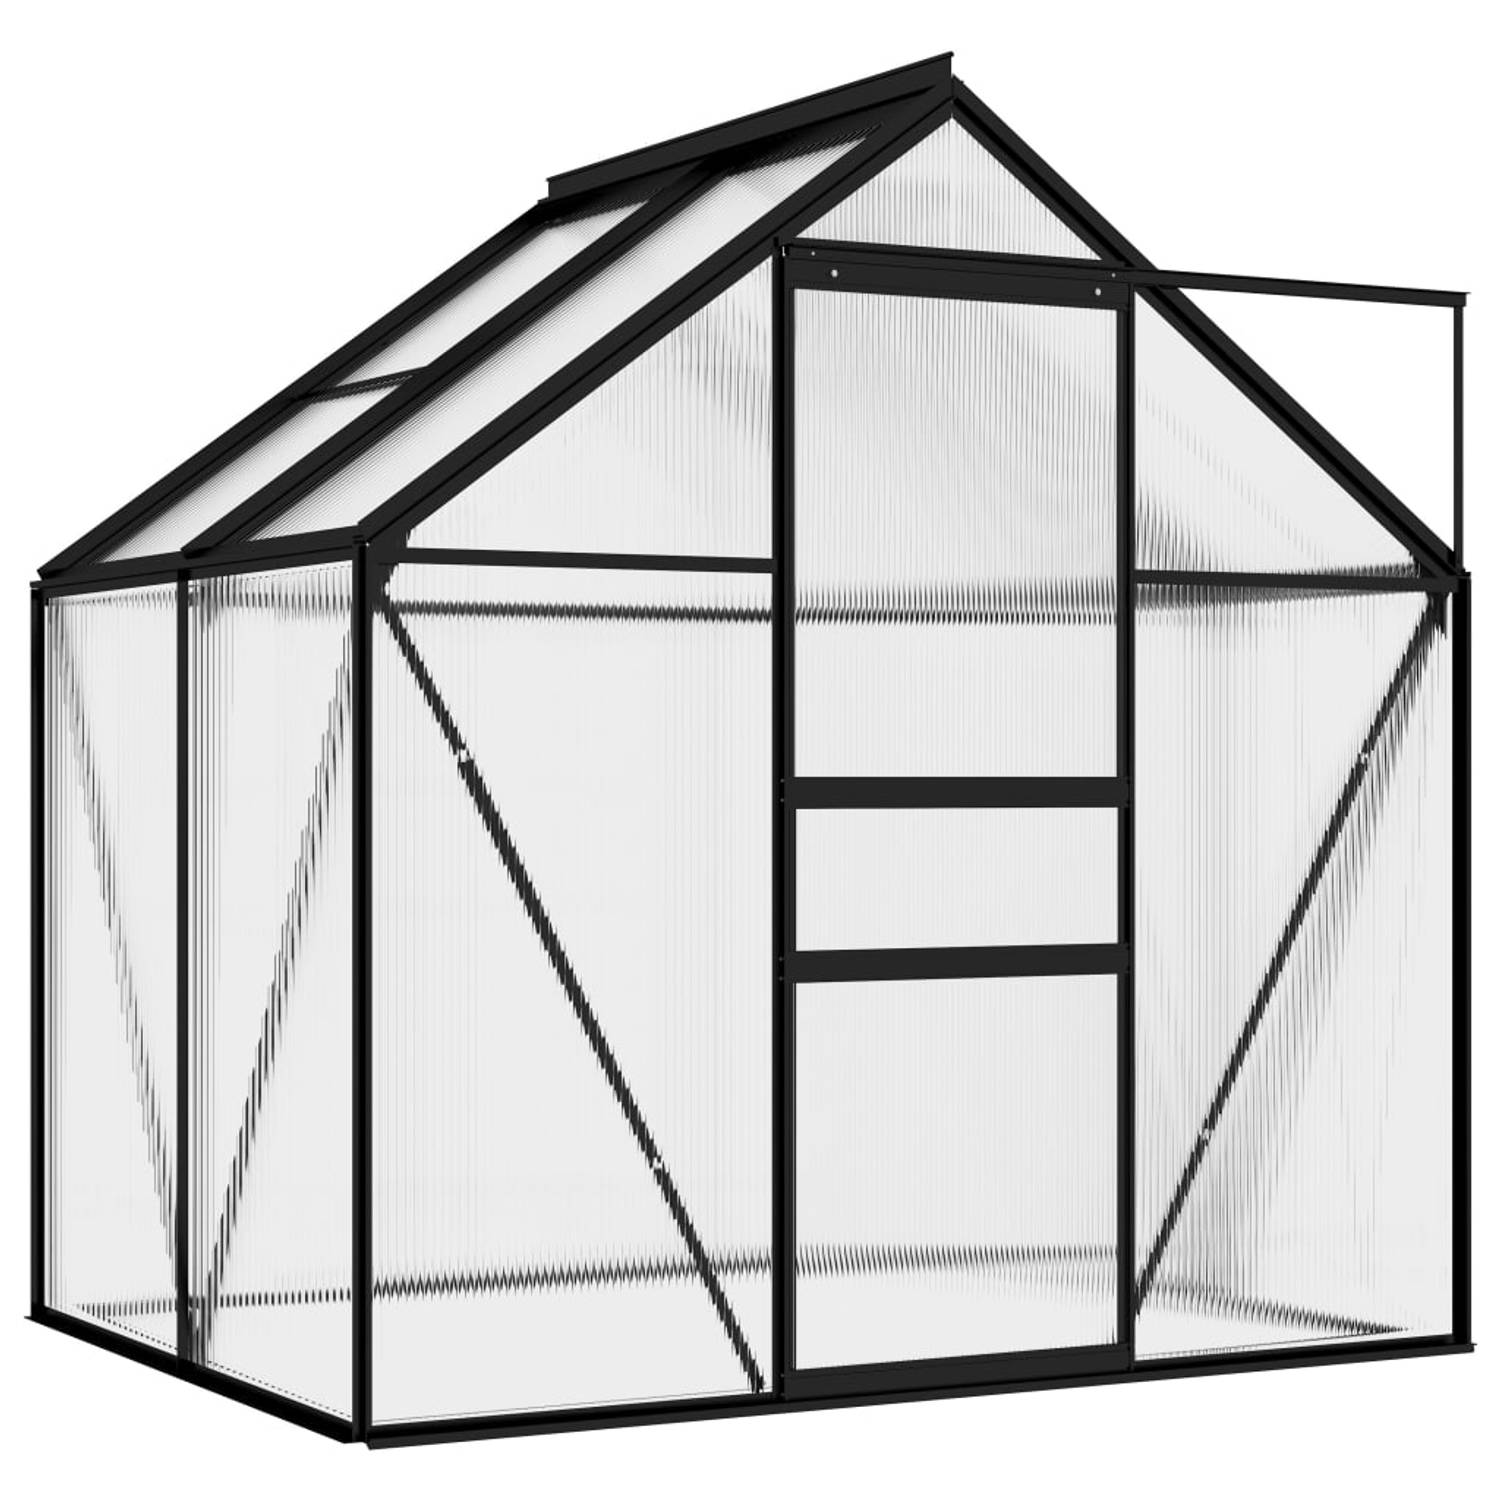 The Living Store Kweekkas - 2.47 m² - Polycarbonaat panelen - Aluminium constructie